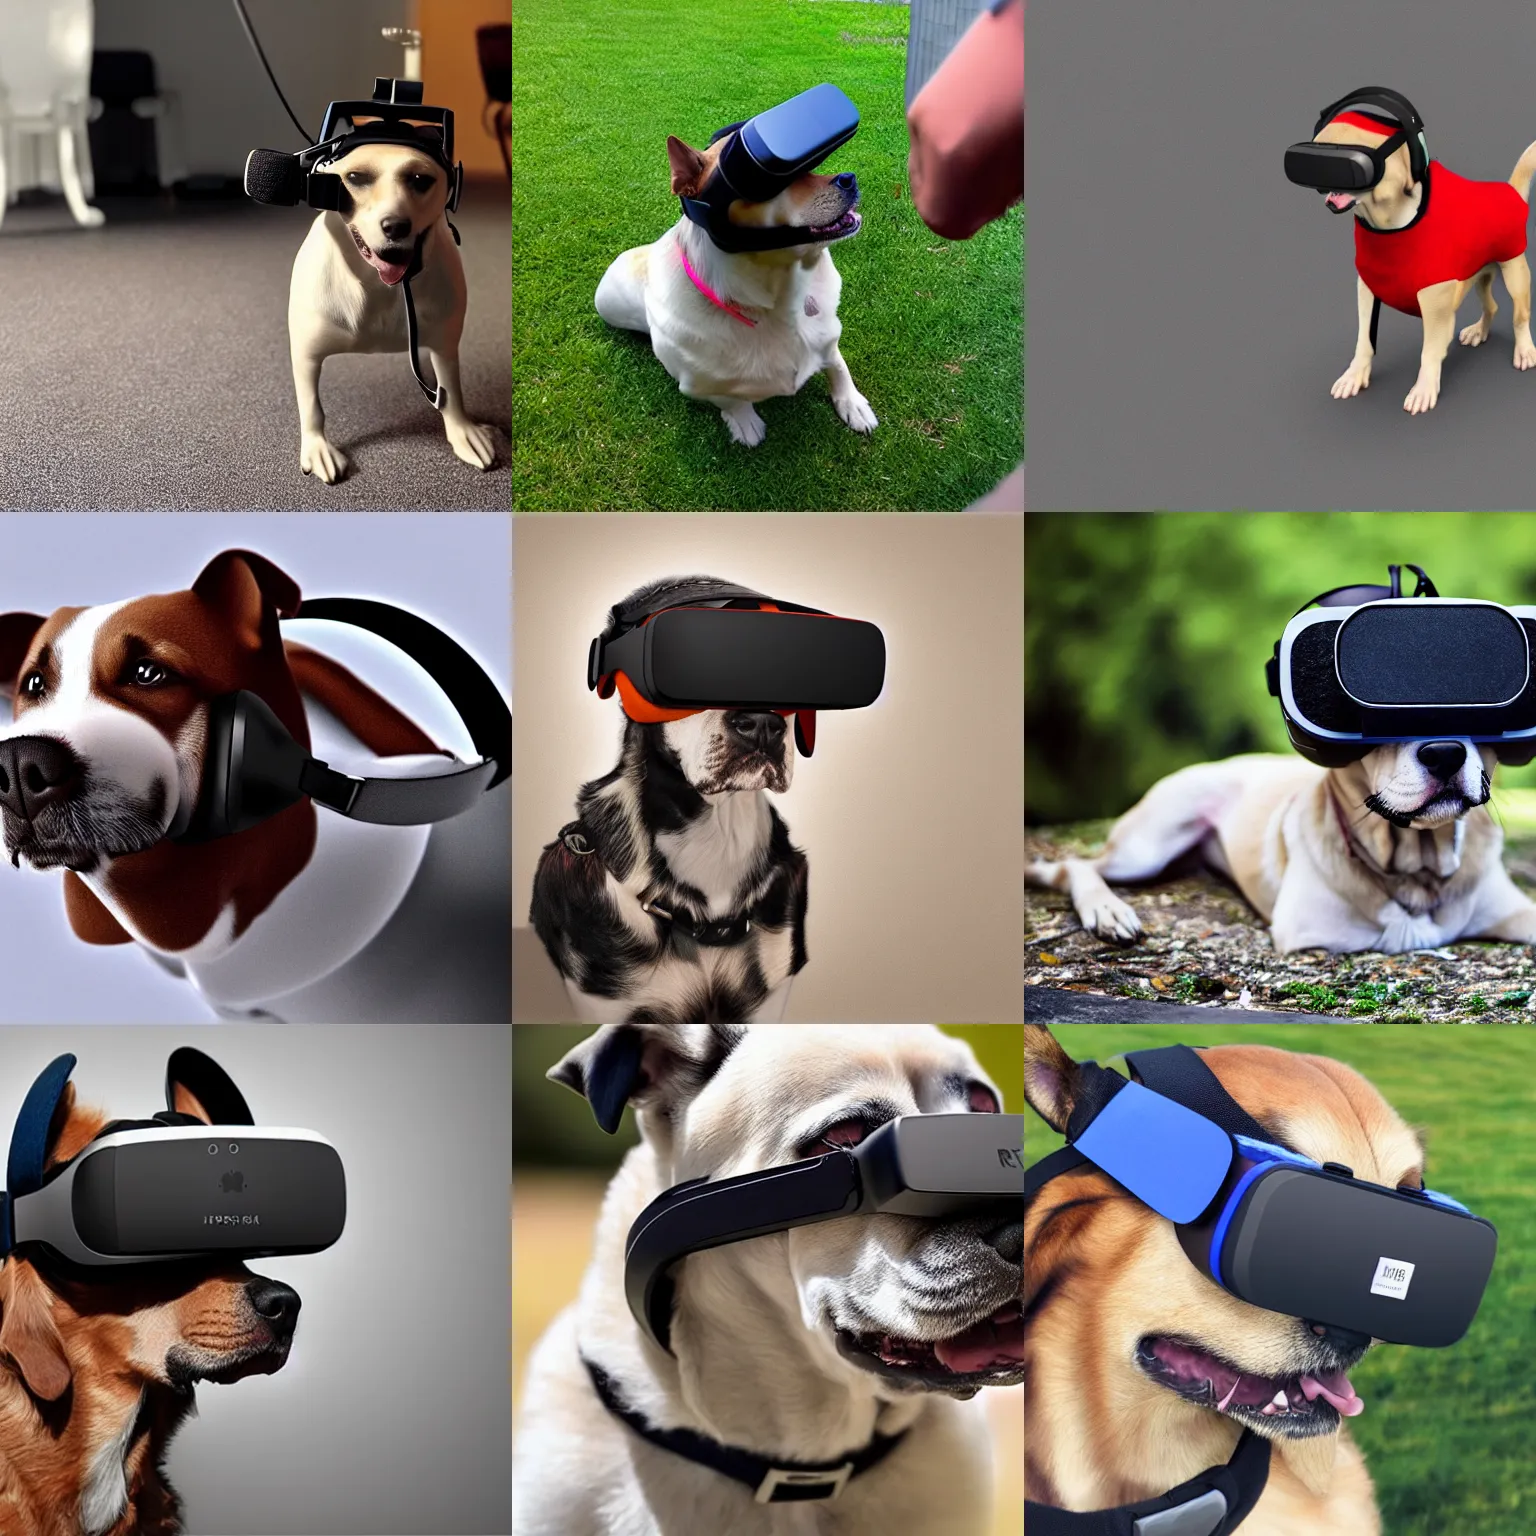 Prompt: dog wearing vr headset, hyperrealism